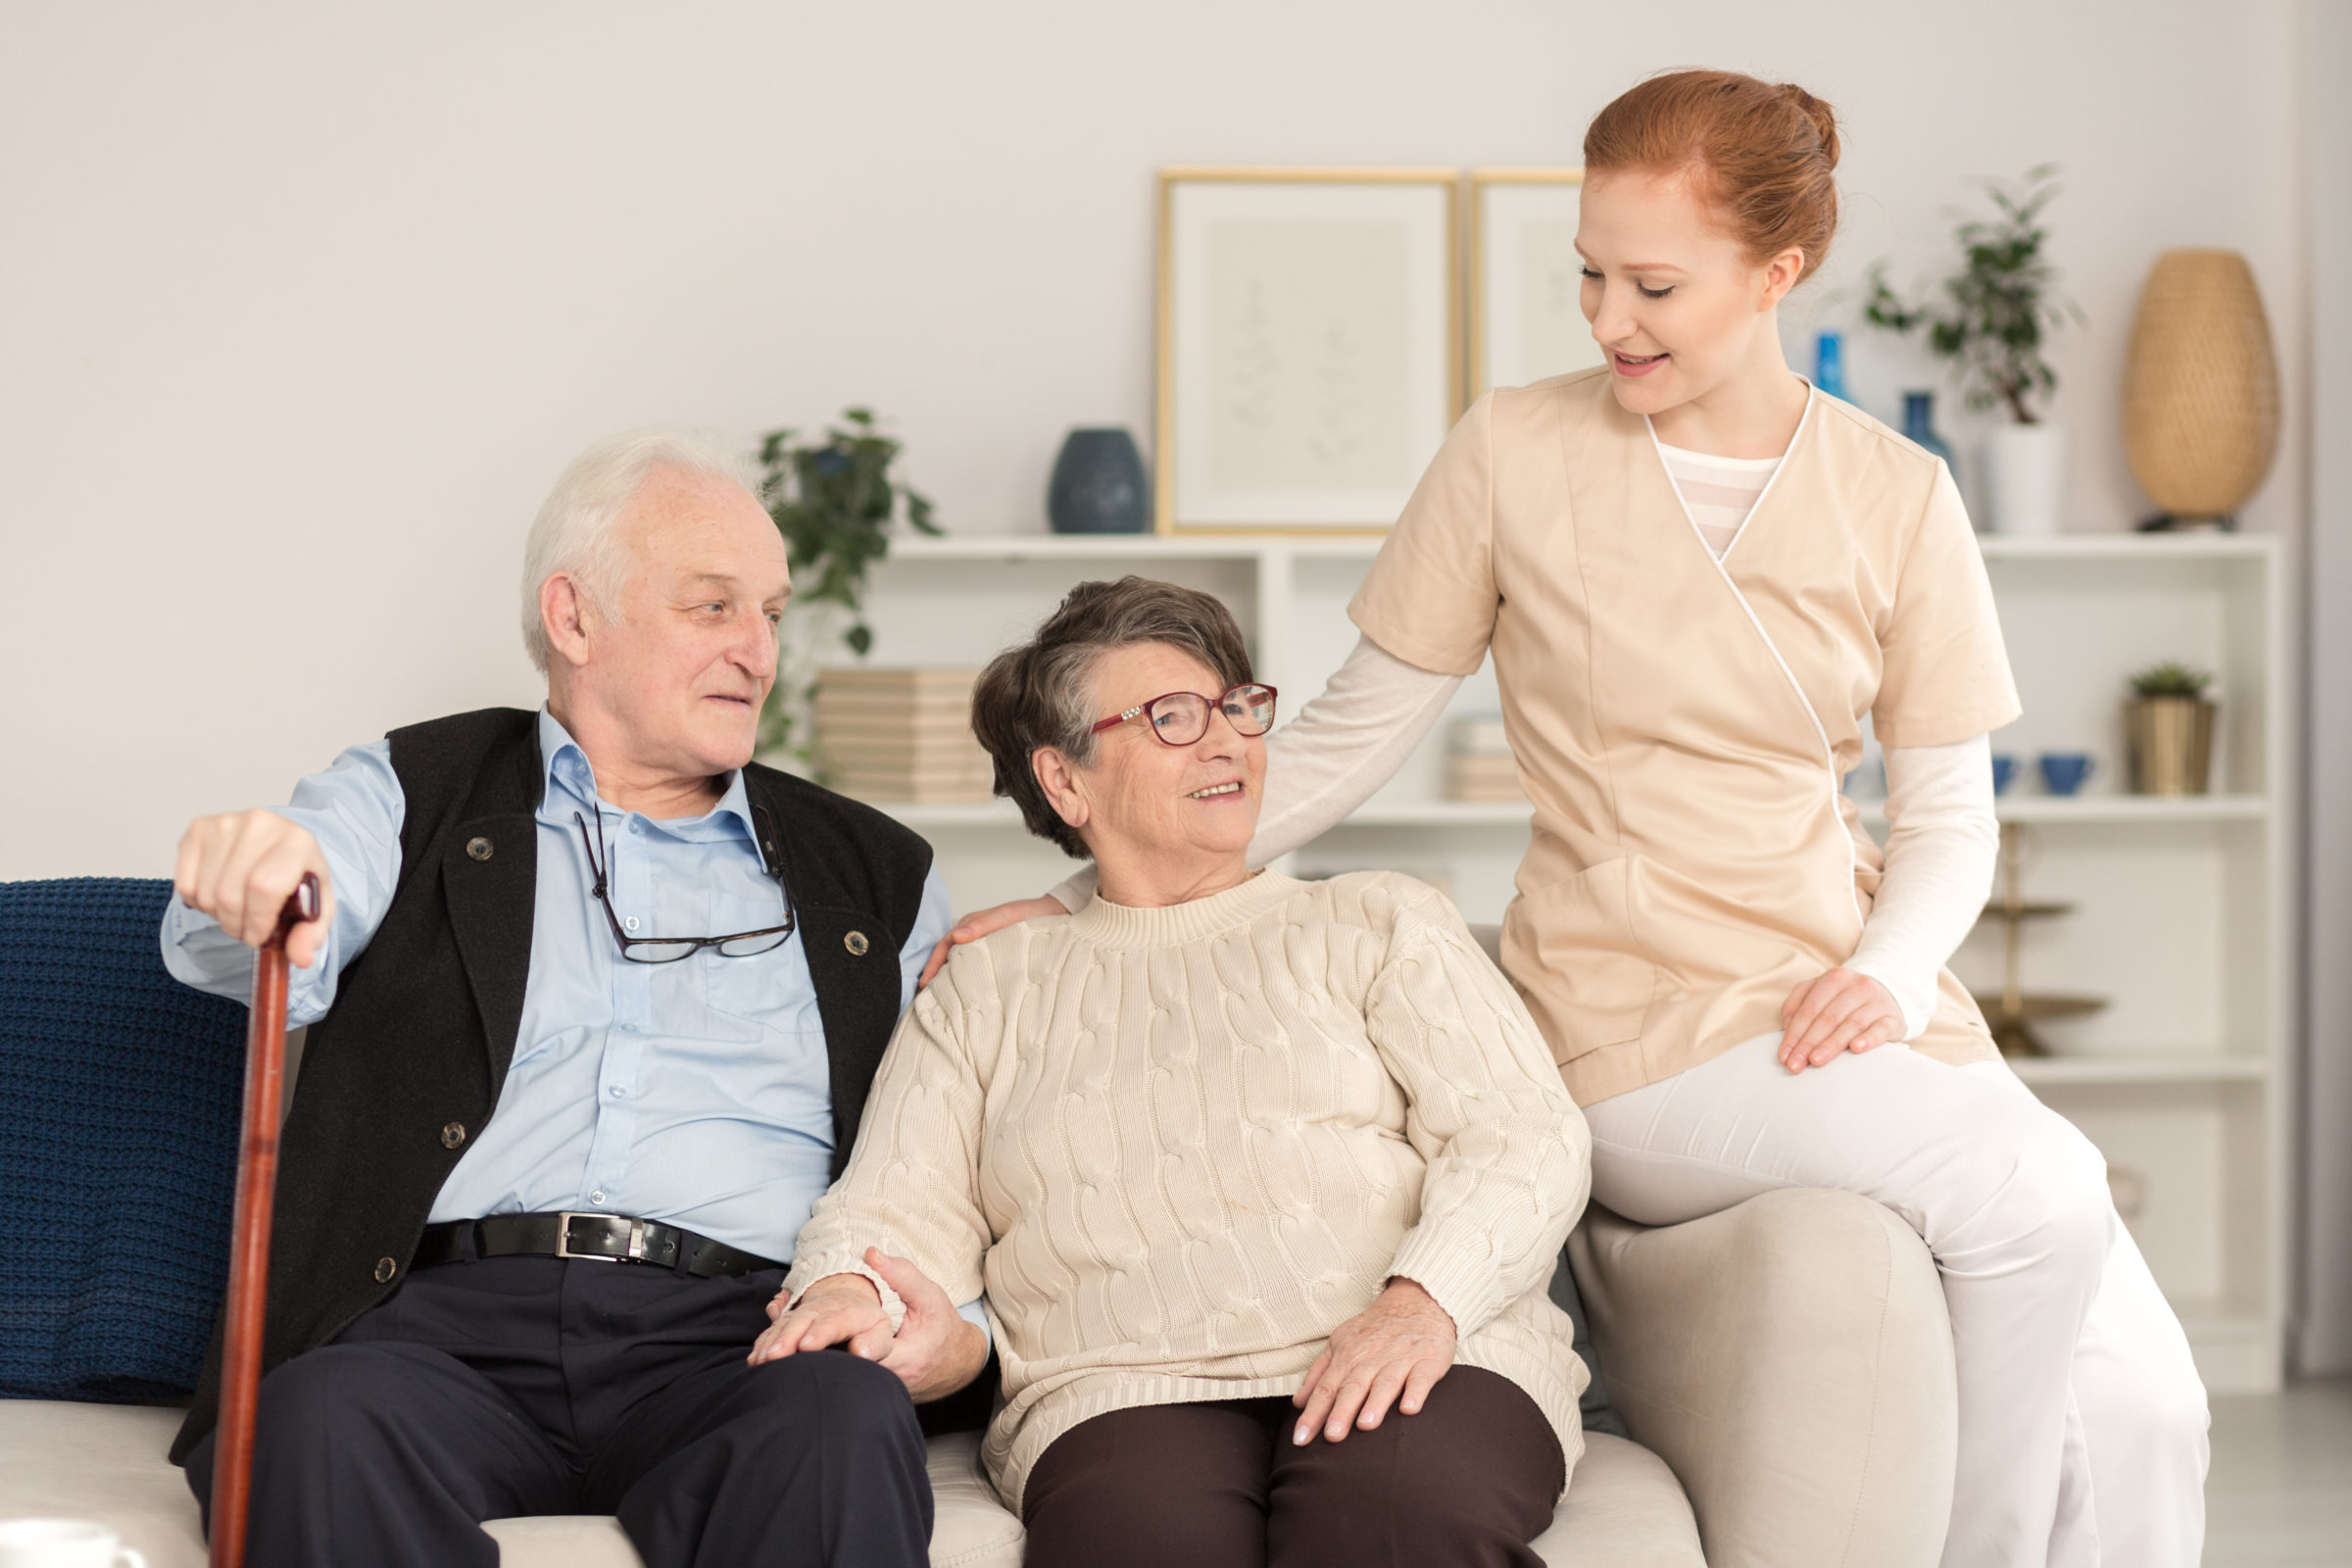 assistance woman consoling senior couple 2021 08 26 15 45 27 utc